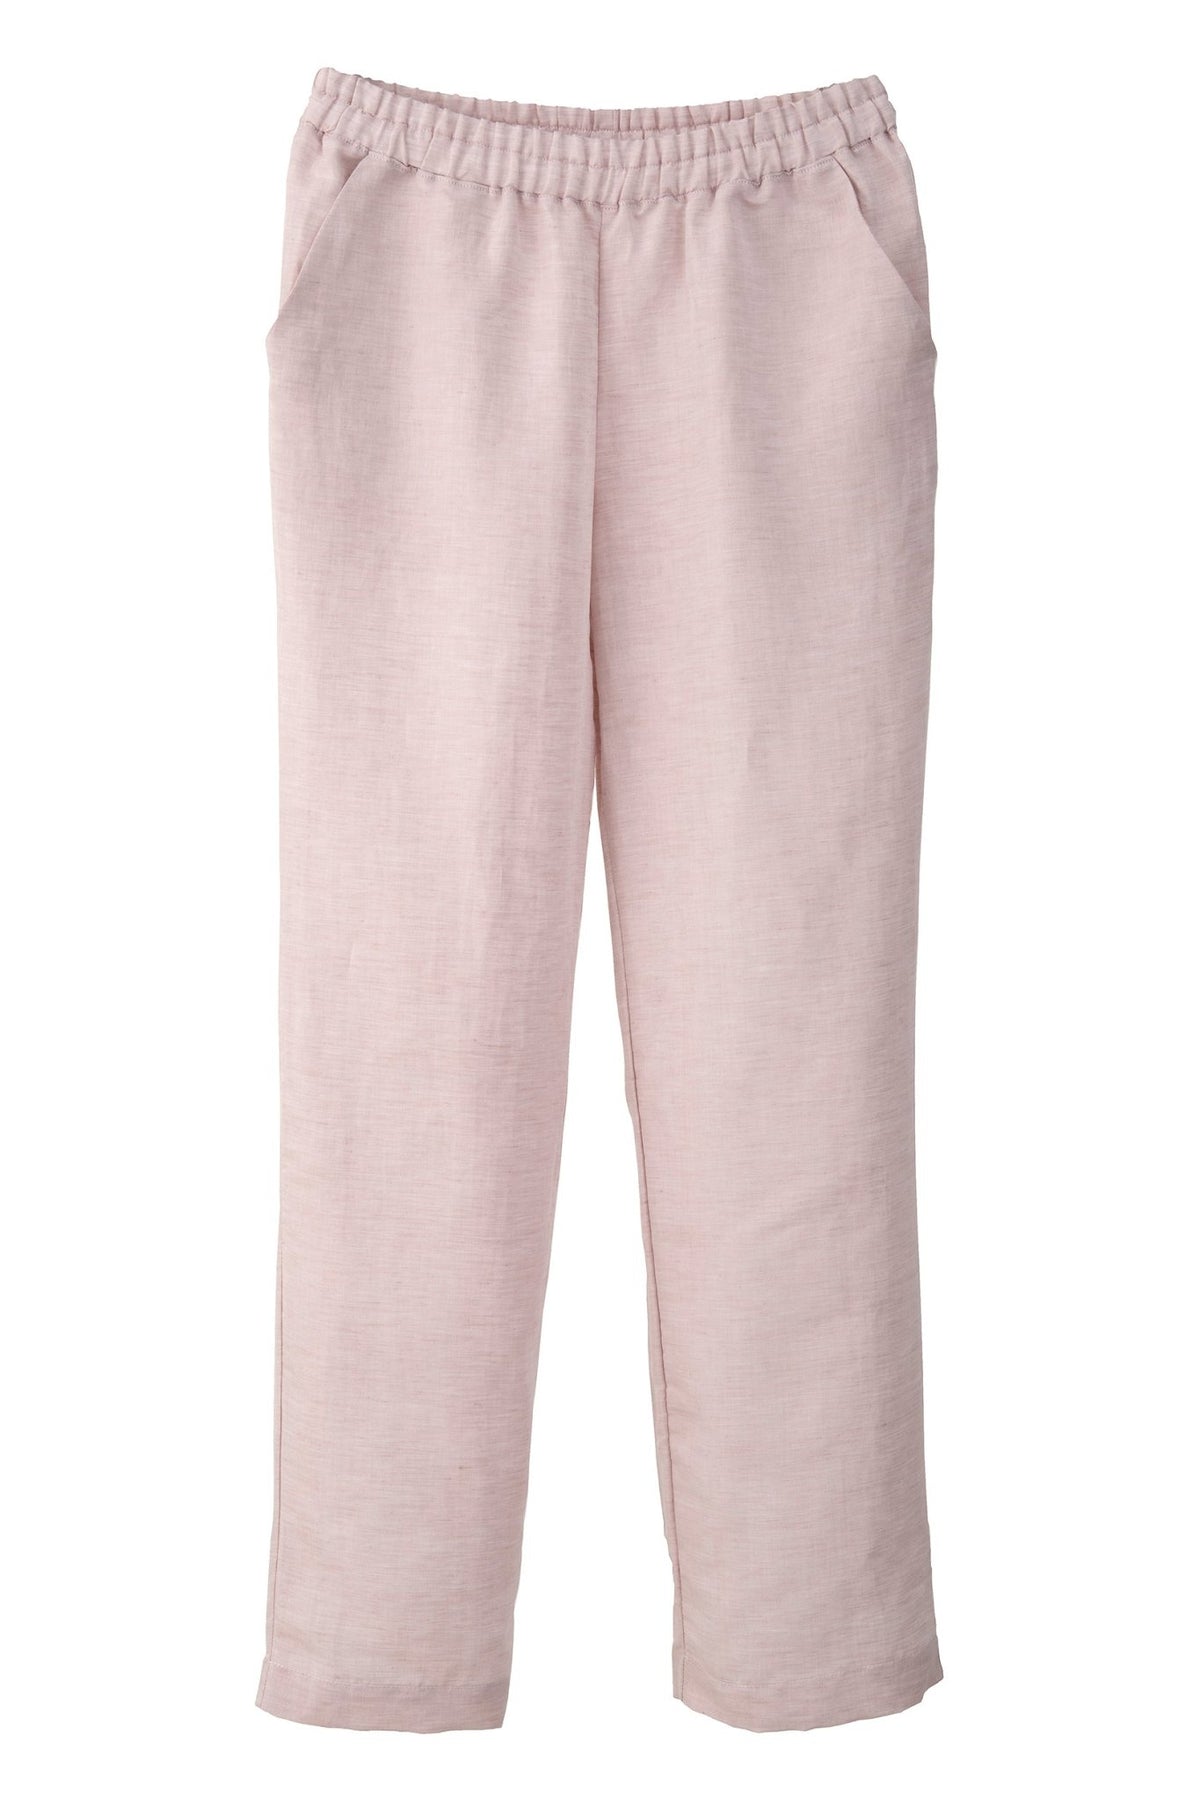 Halbleinen Homewear Pant Long in Rose Freisteller #farbe_Rosé #farbe_Rosé